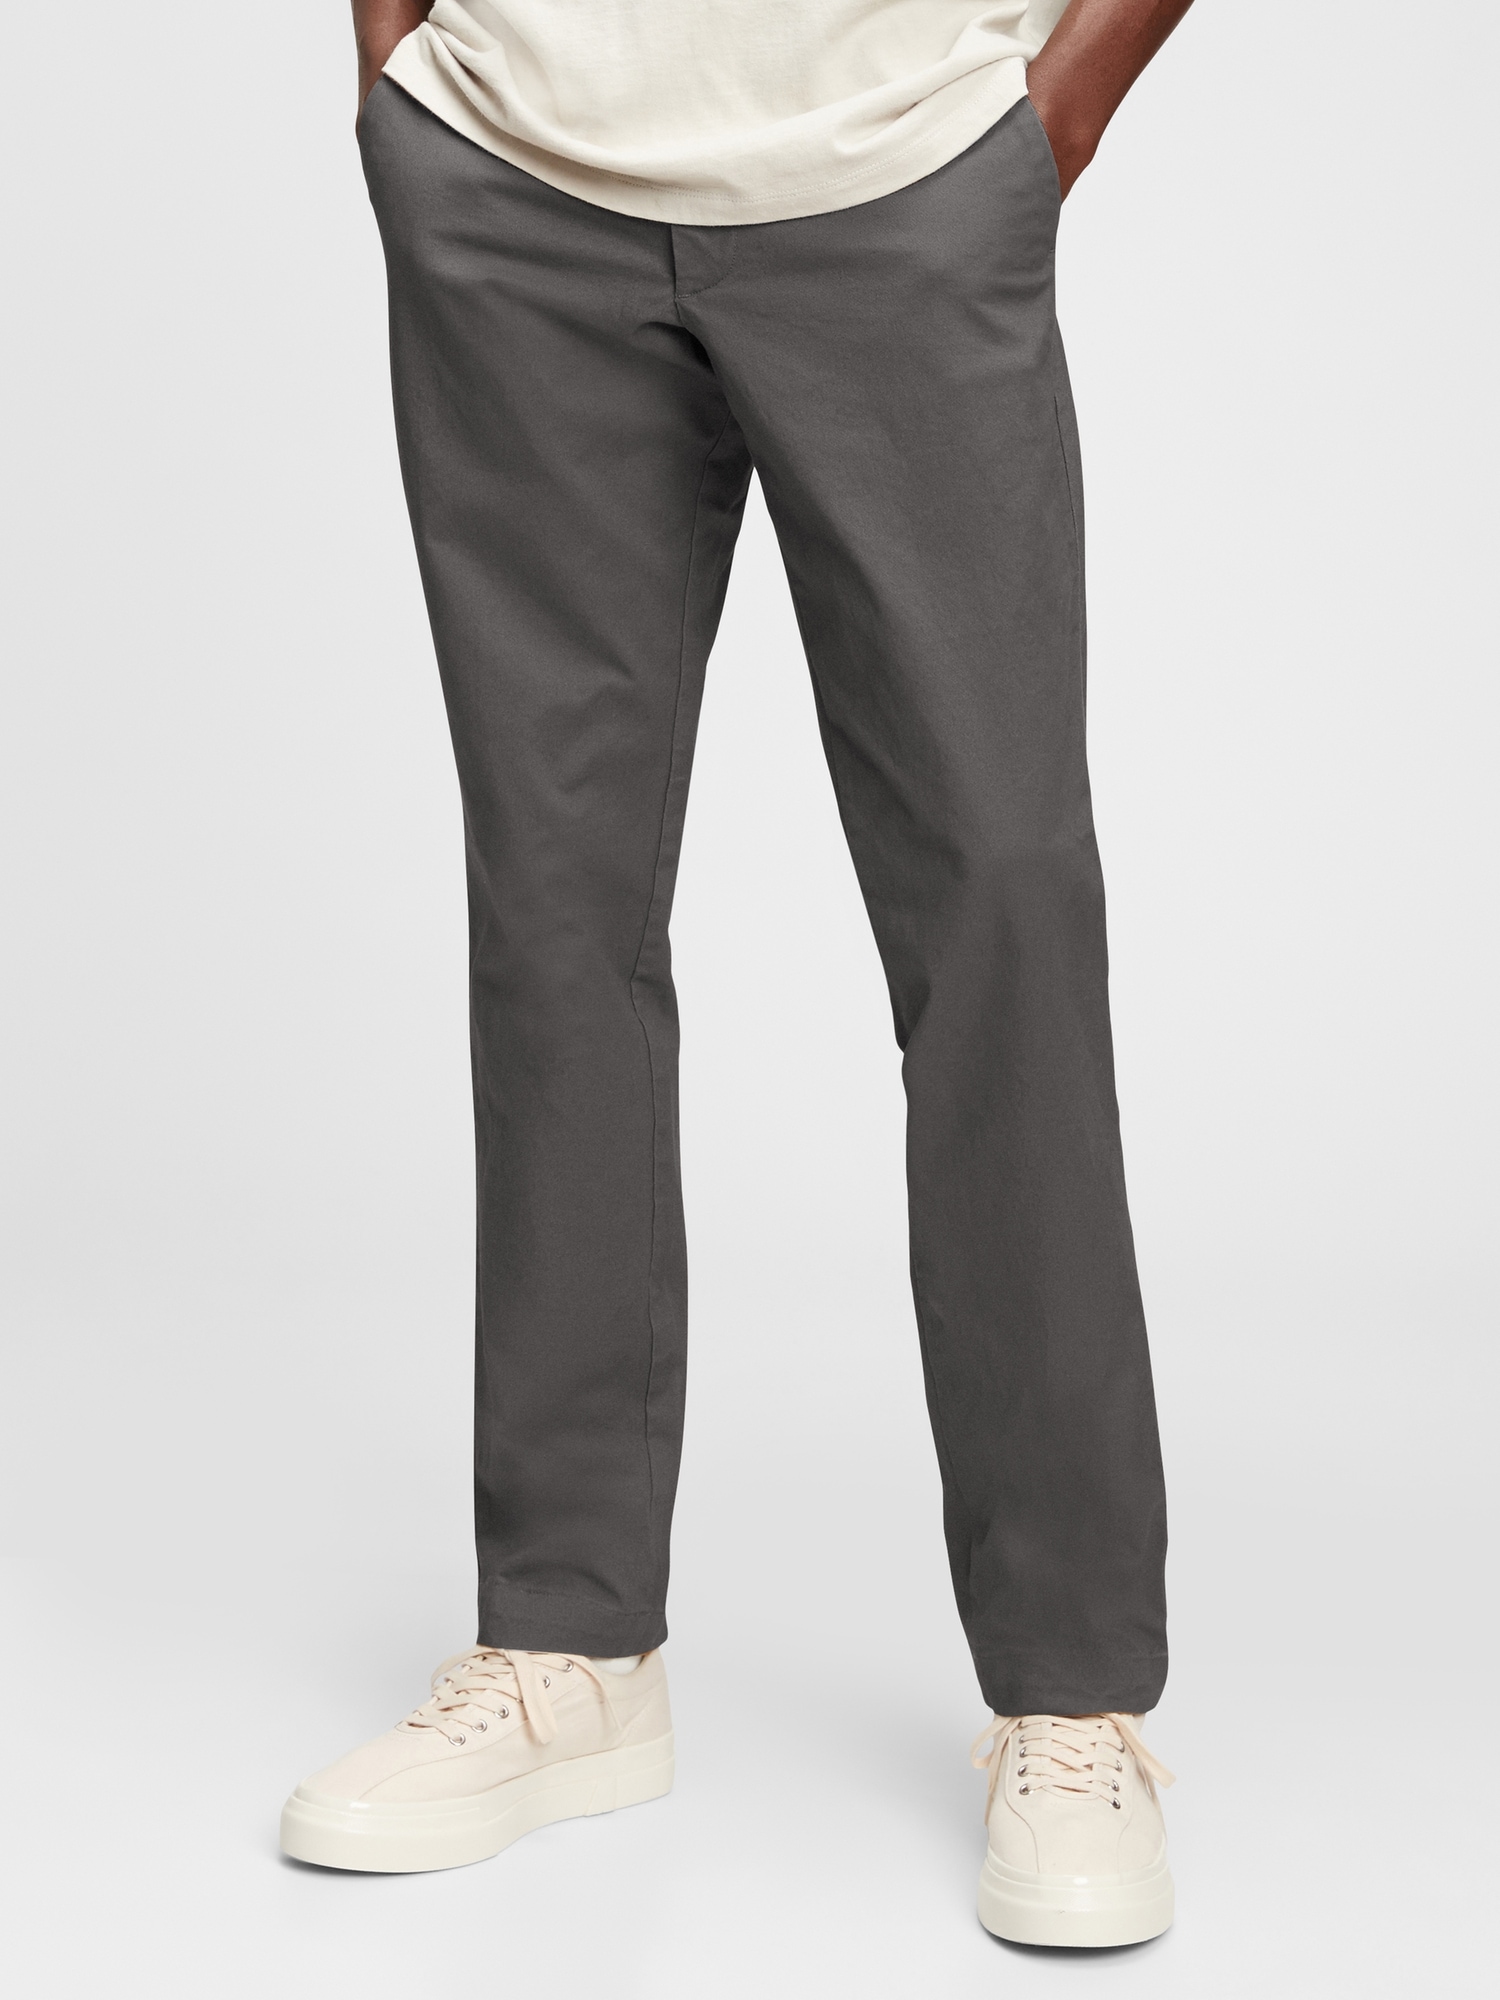 GAP Mens Hudson Khaki Dress Pants Light Tan 36X32 100% Cotton | eBay